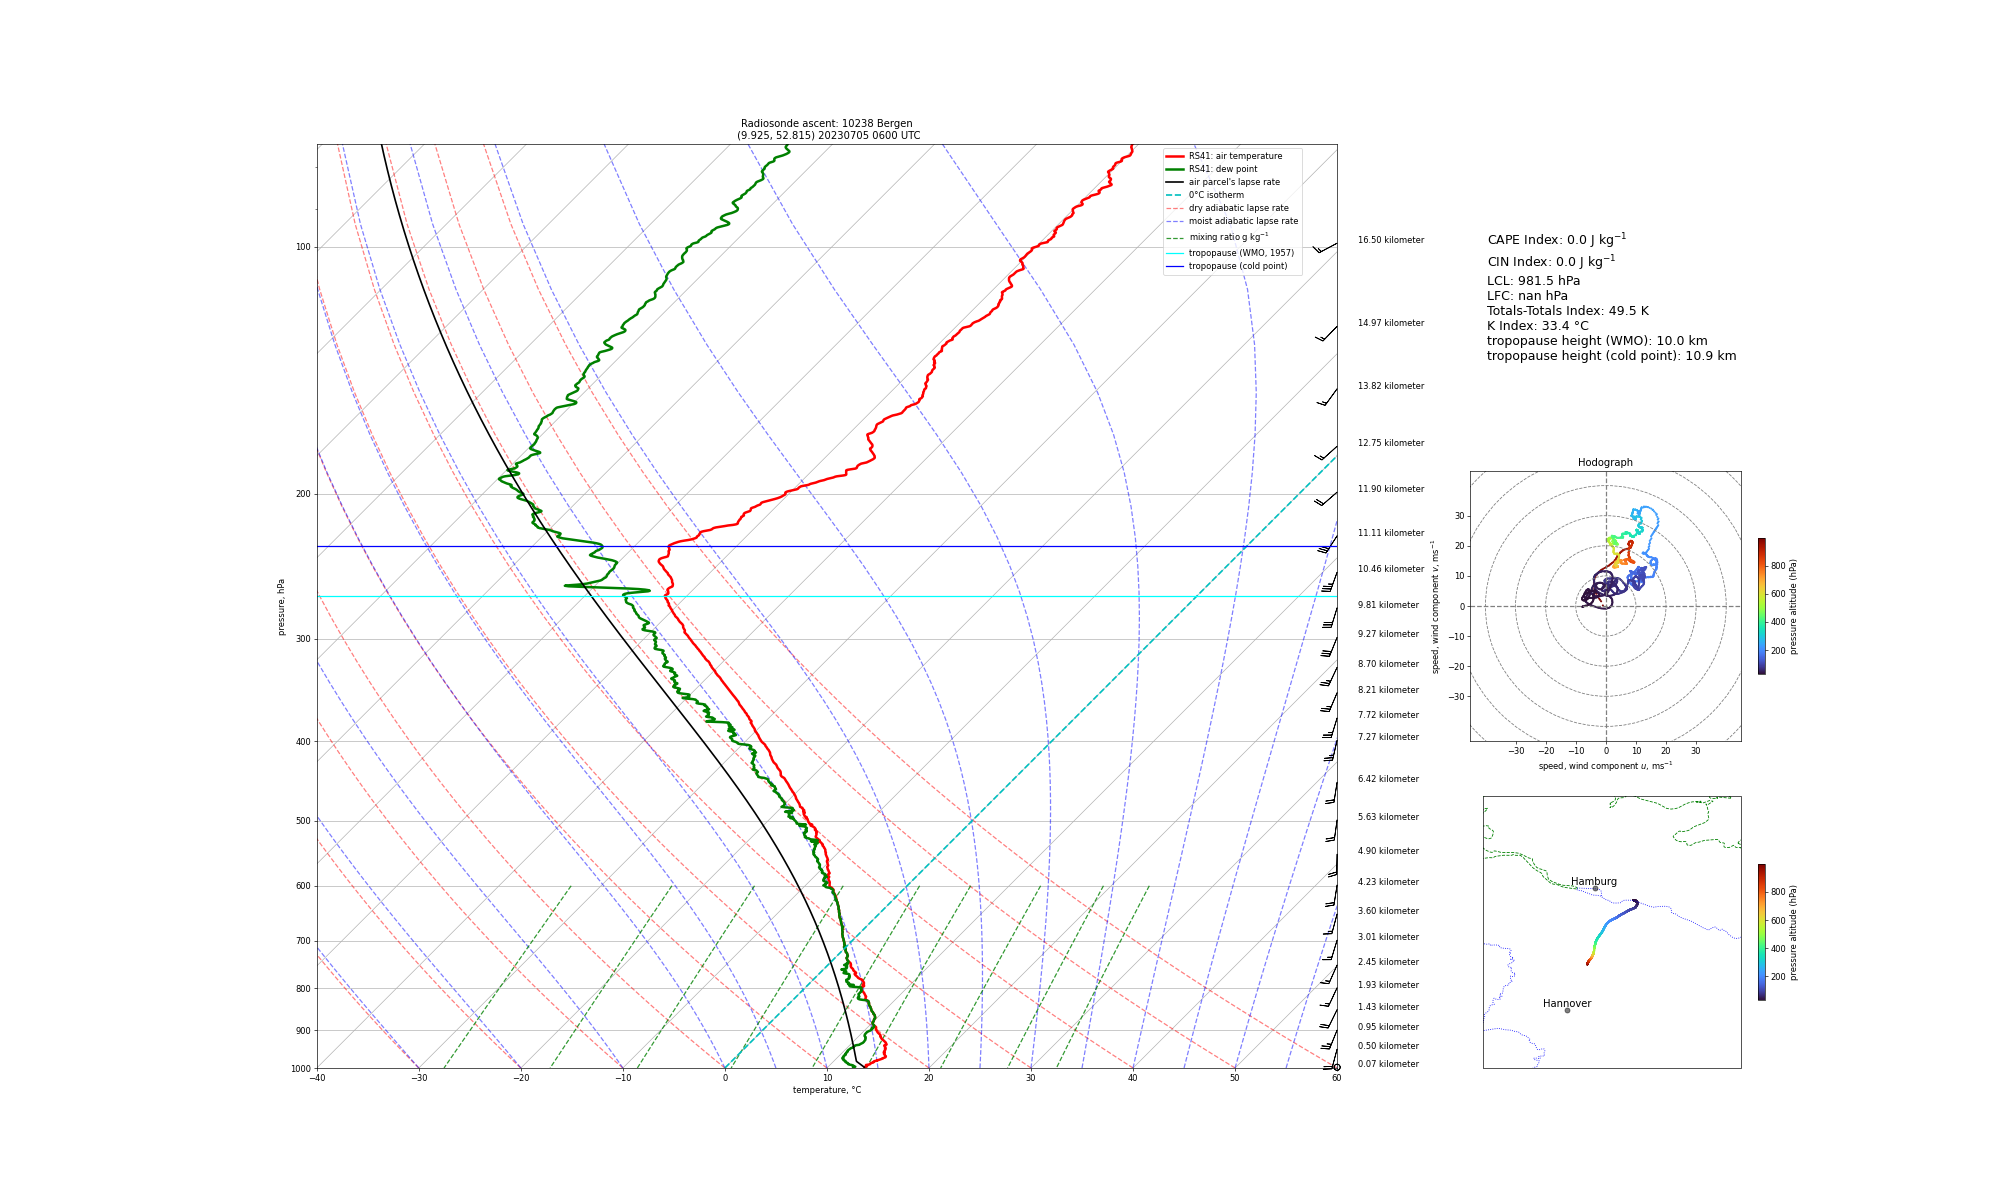 Visualisation of the radiosounding profile at Bergen at 0600 UTC